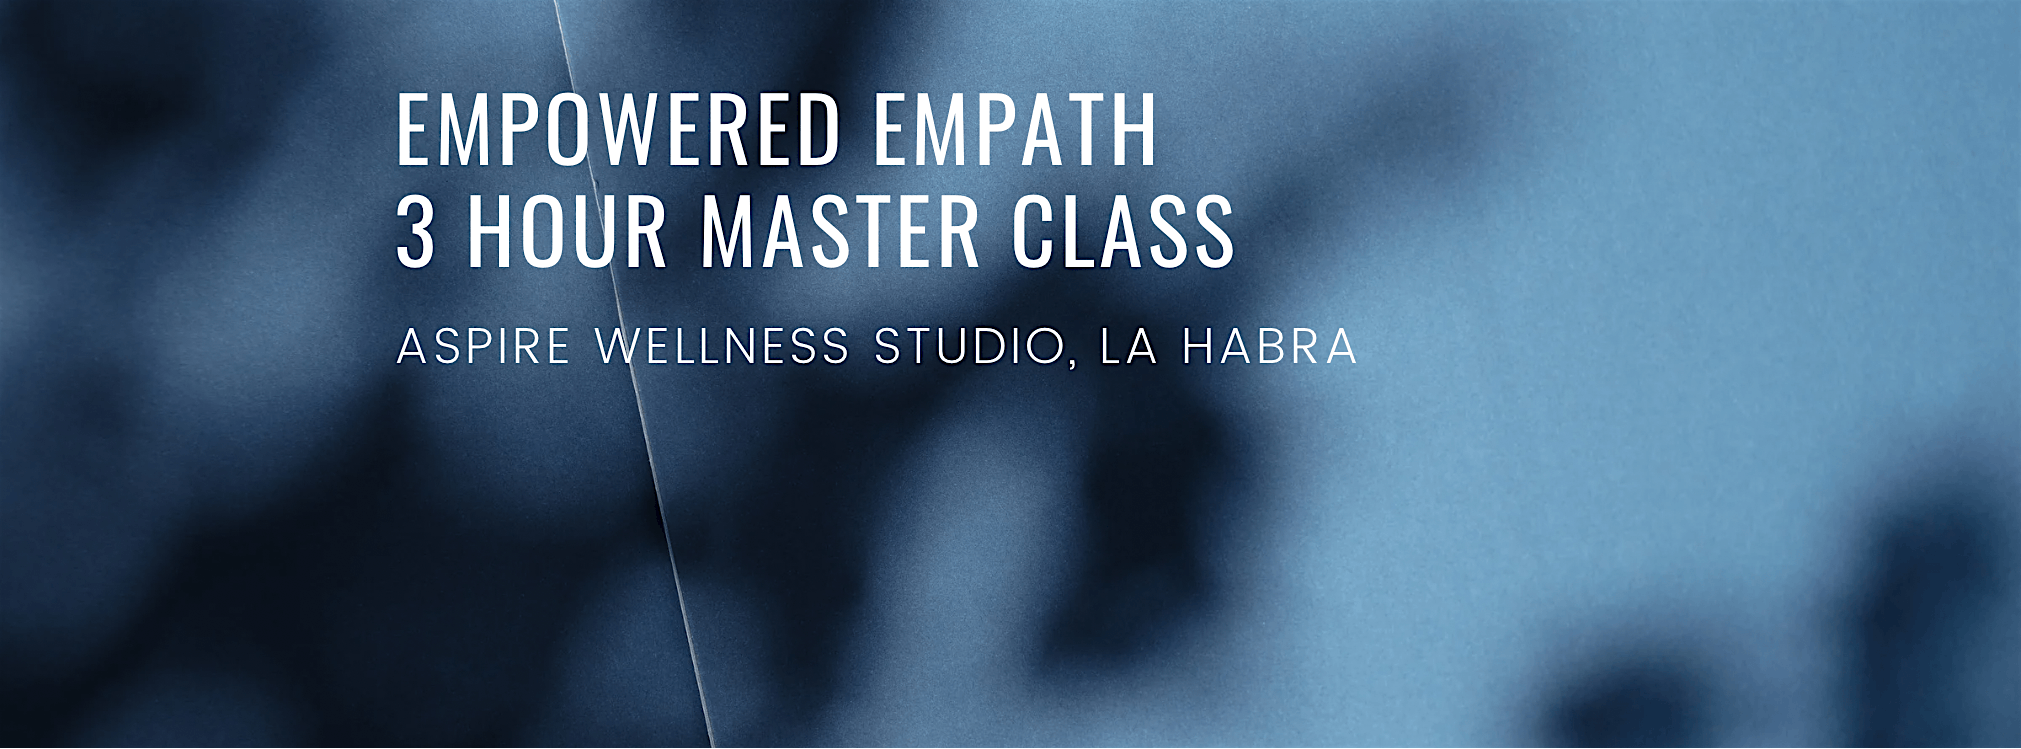 Empowered Empath Master Class